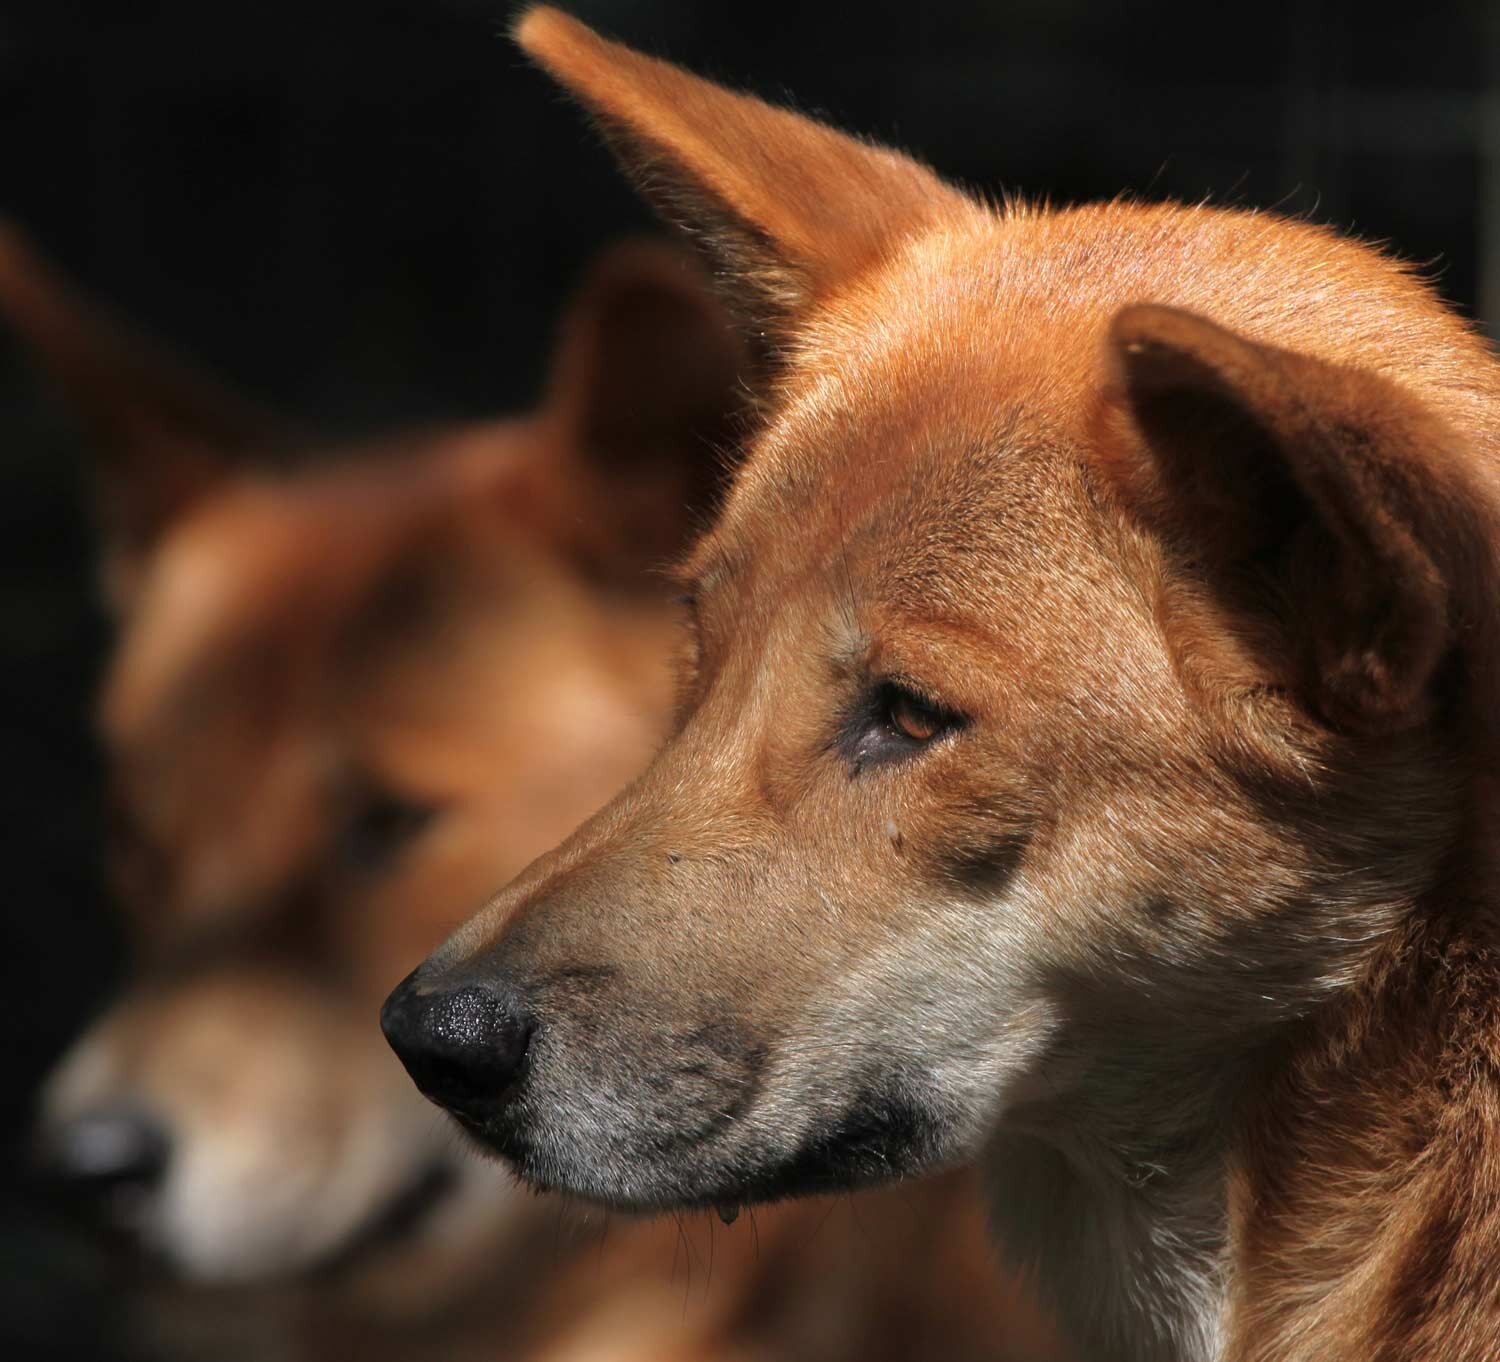 Dingo deterrent - protecting yourself from dingo encounters